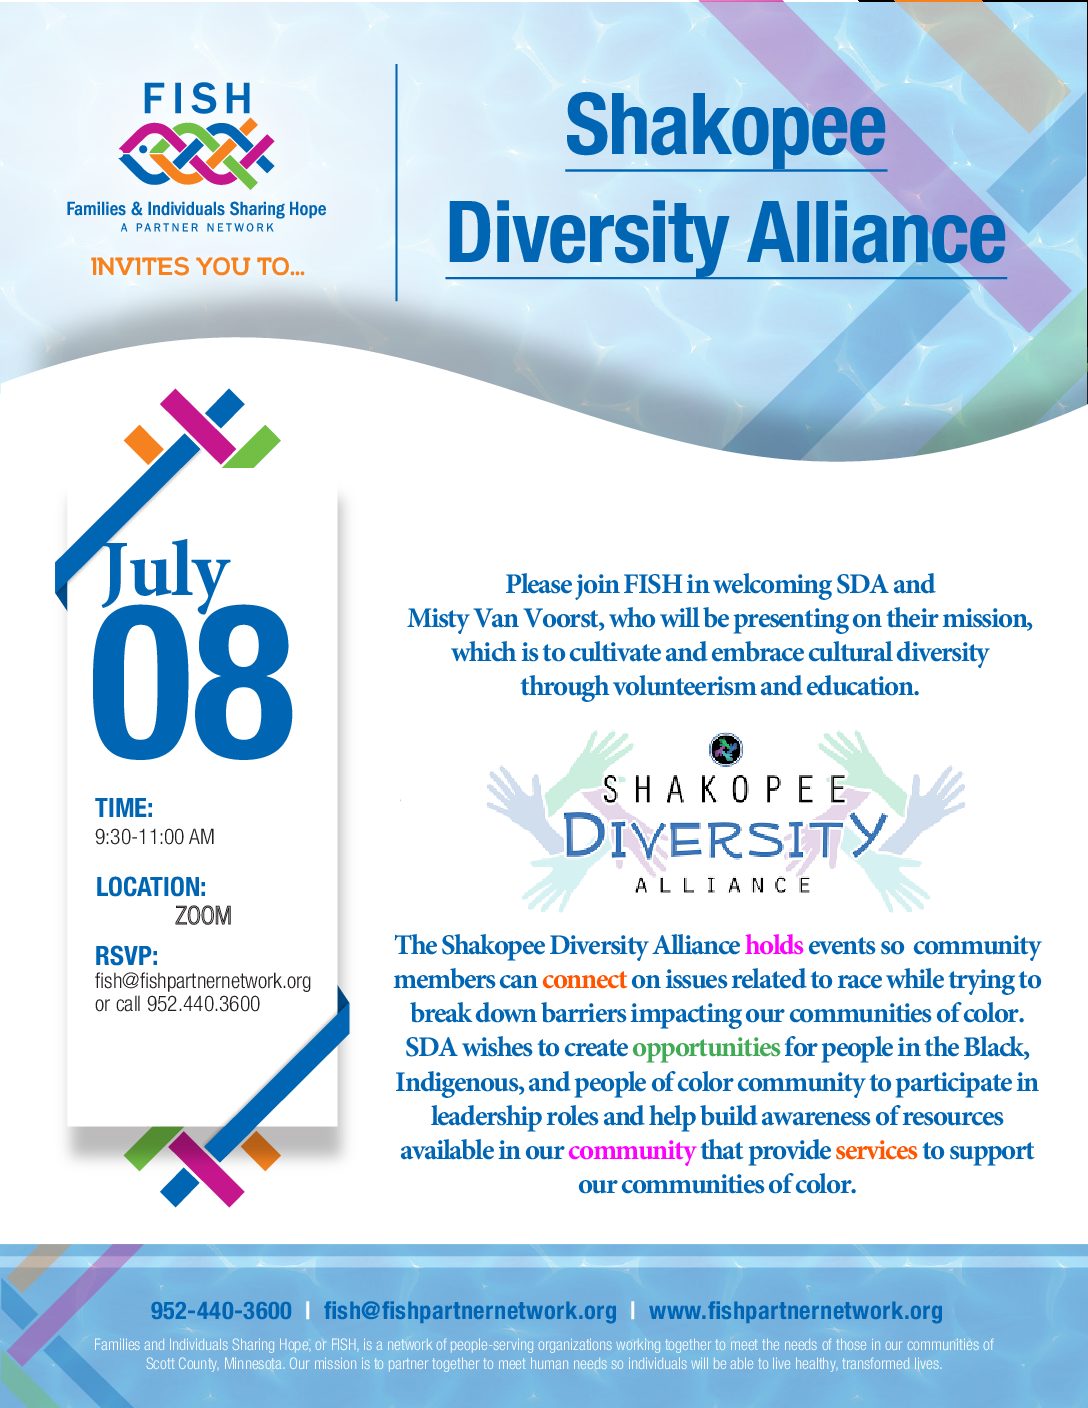 FISH Meeting Tomorrow – Shakopee Diversity Alliance!